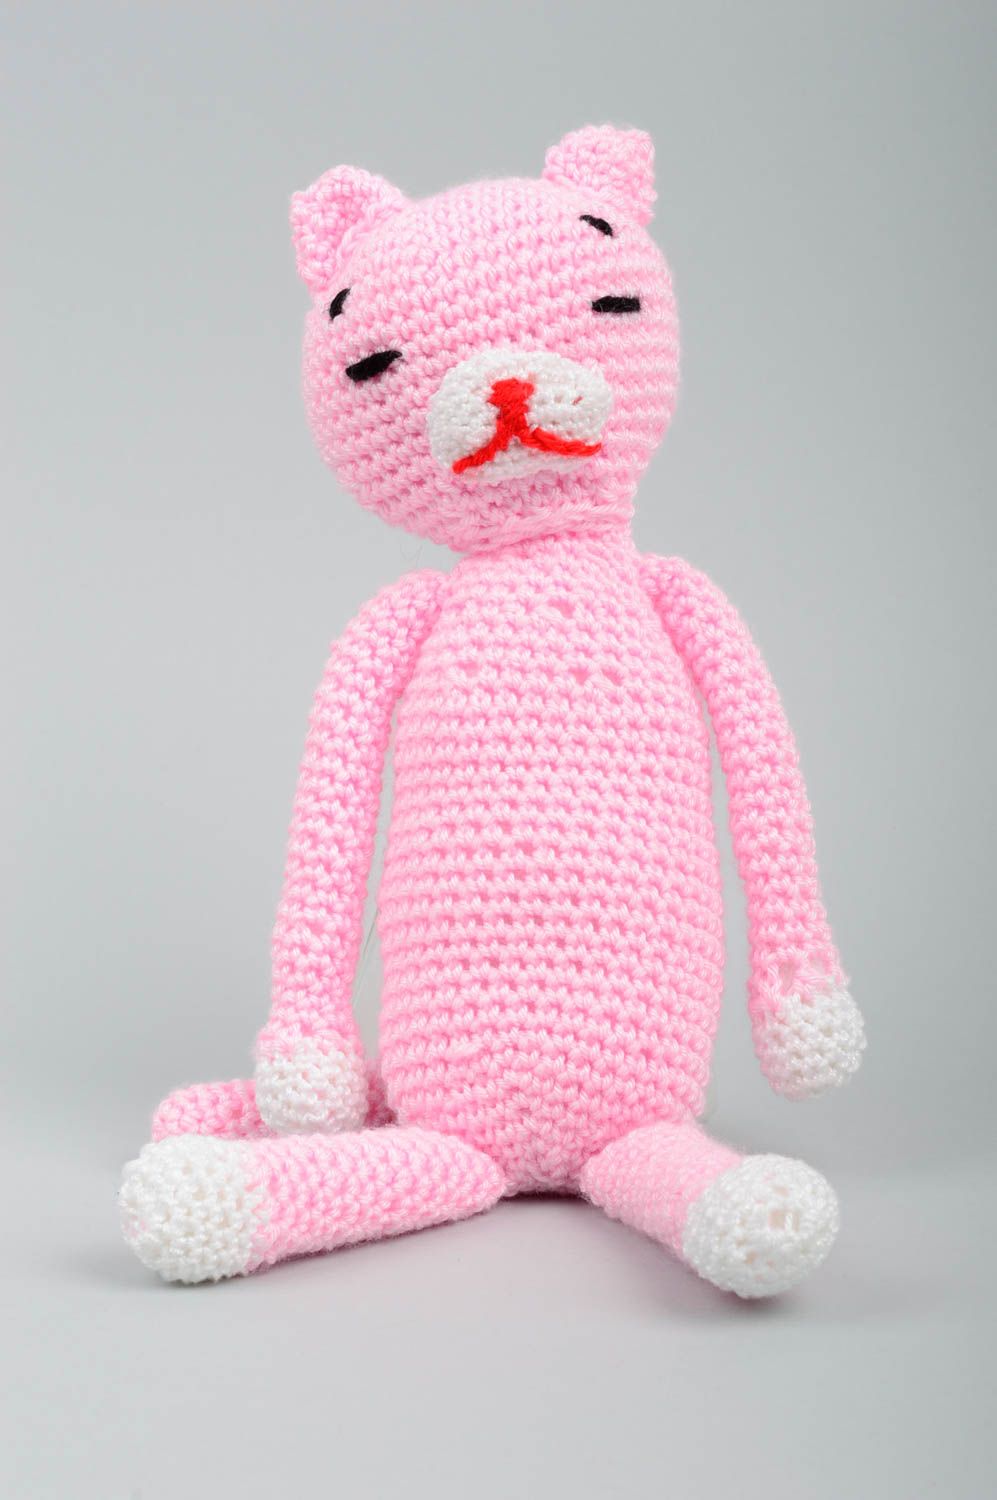 Handmade crocheted soft toy stylish pink toy cute children present kids toy photo 1